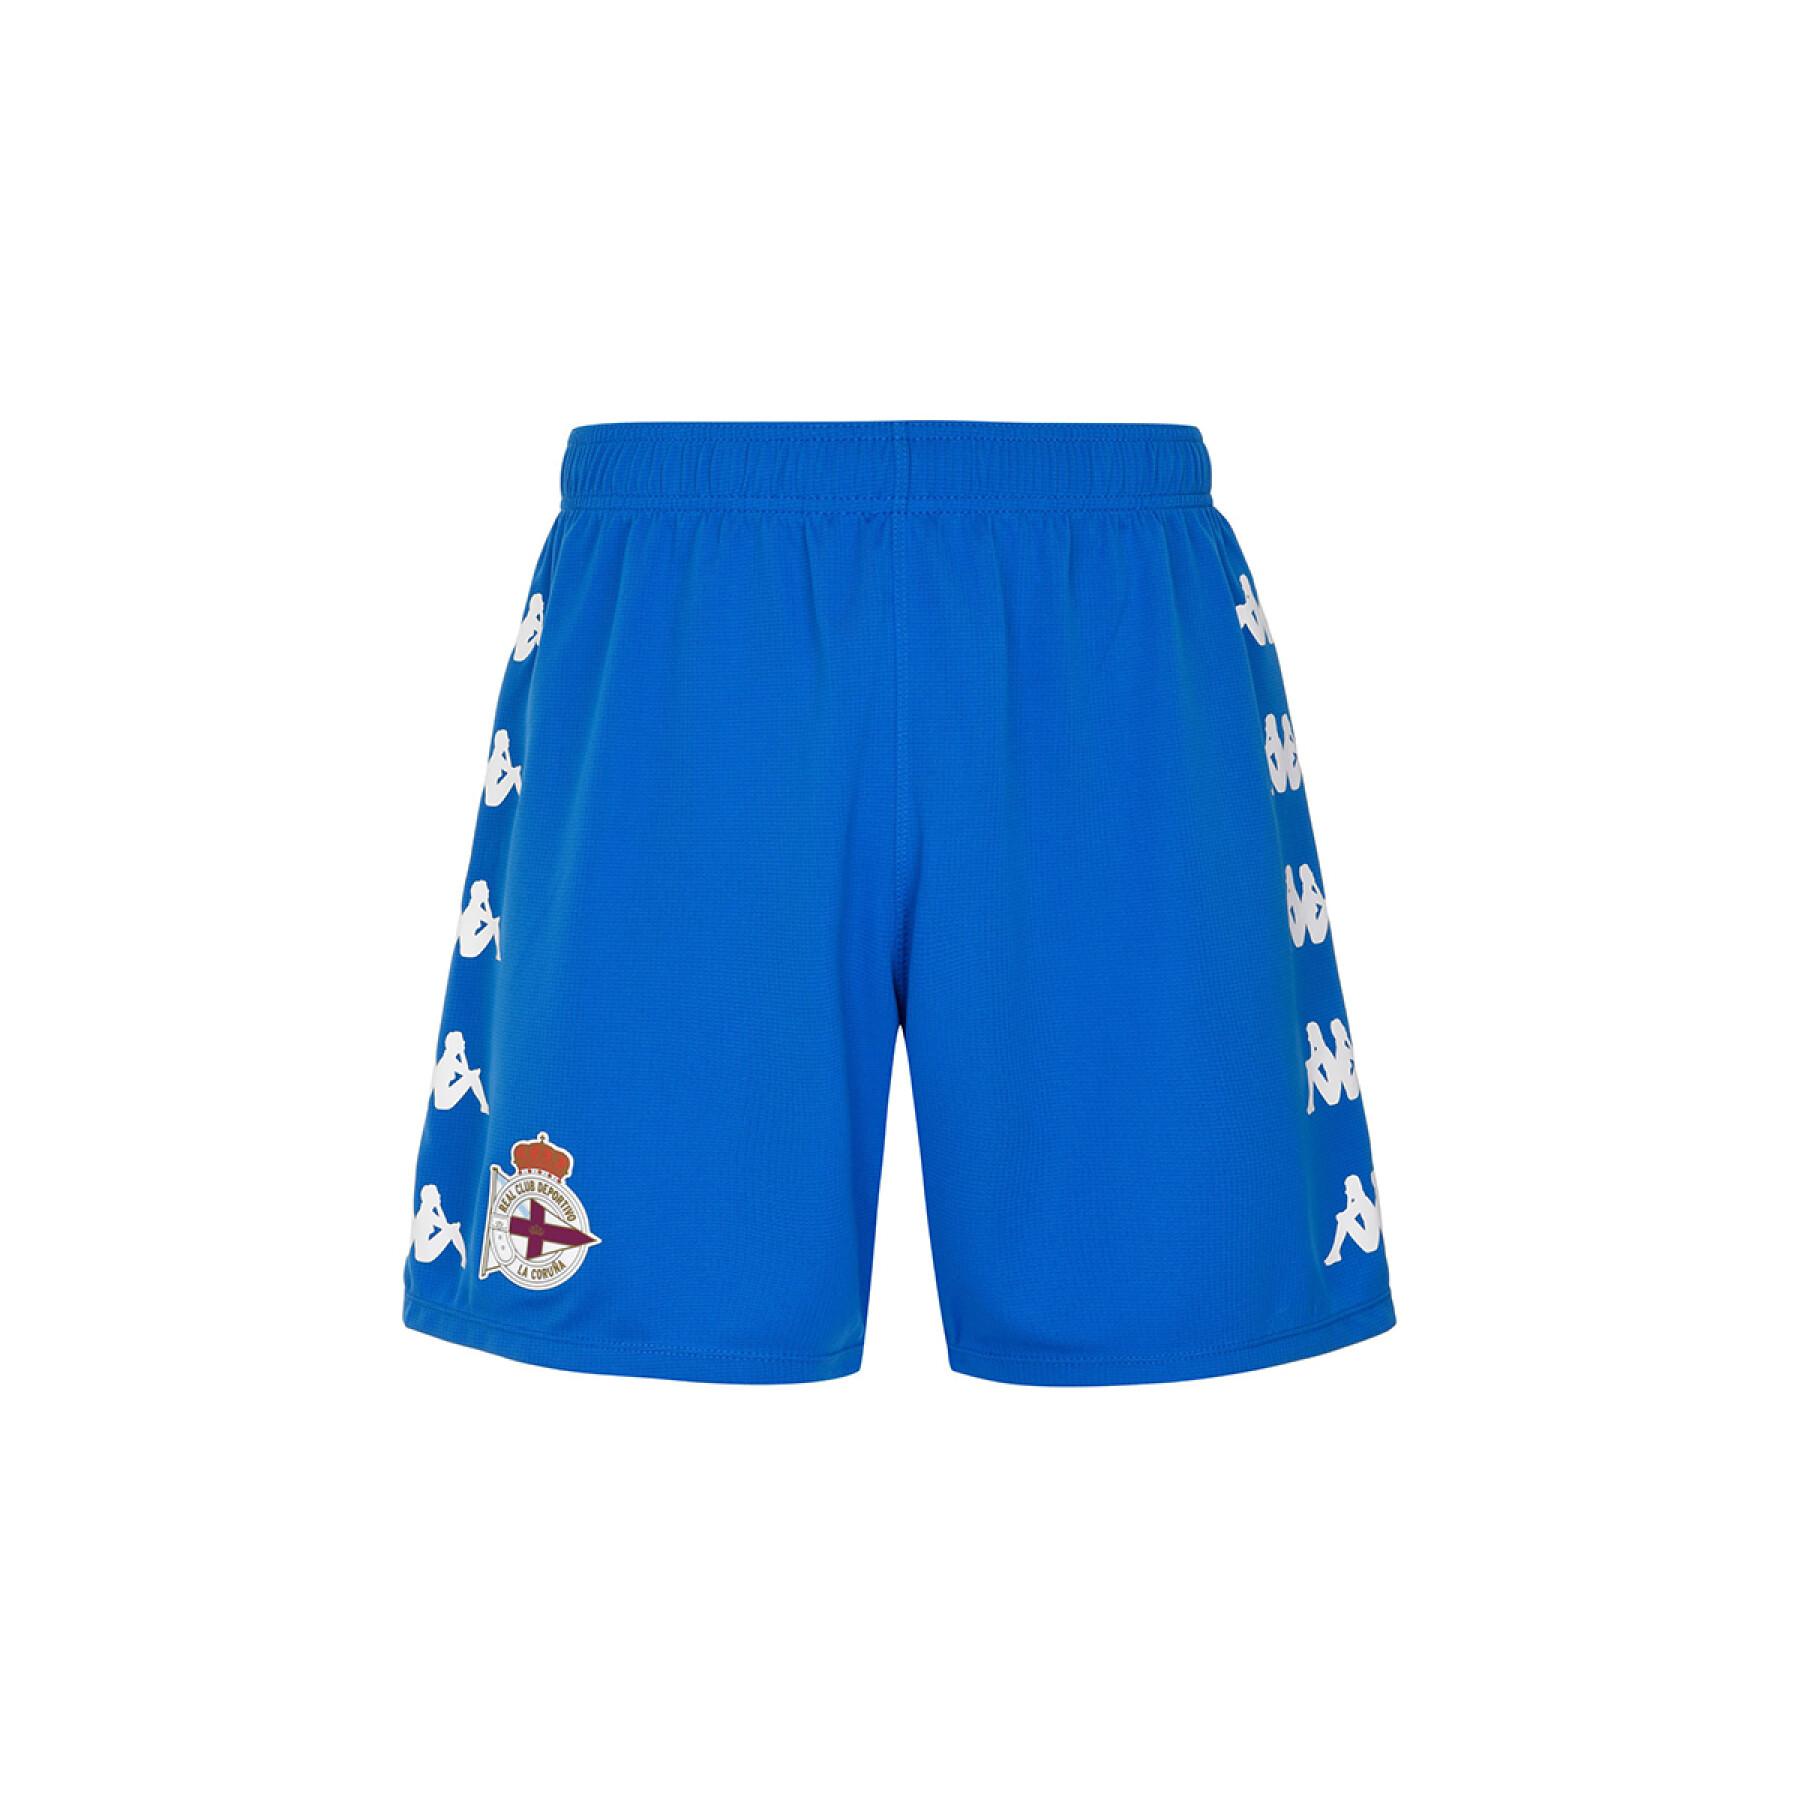 Home shorts Deportivo La Corogne 2021/22